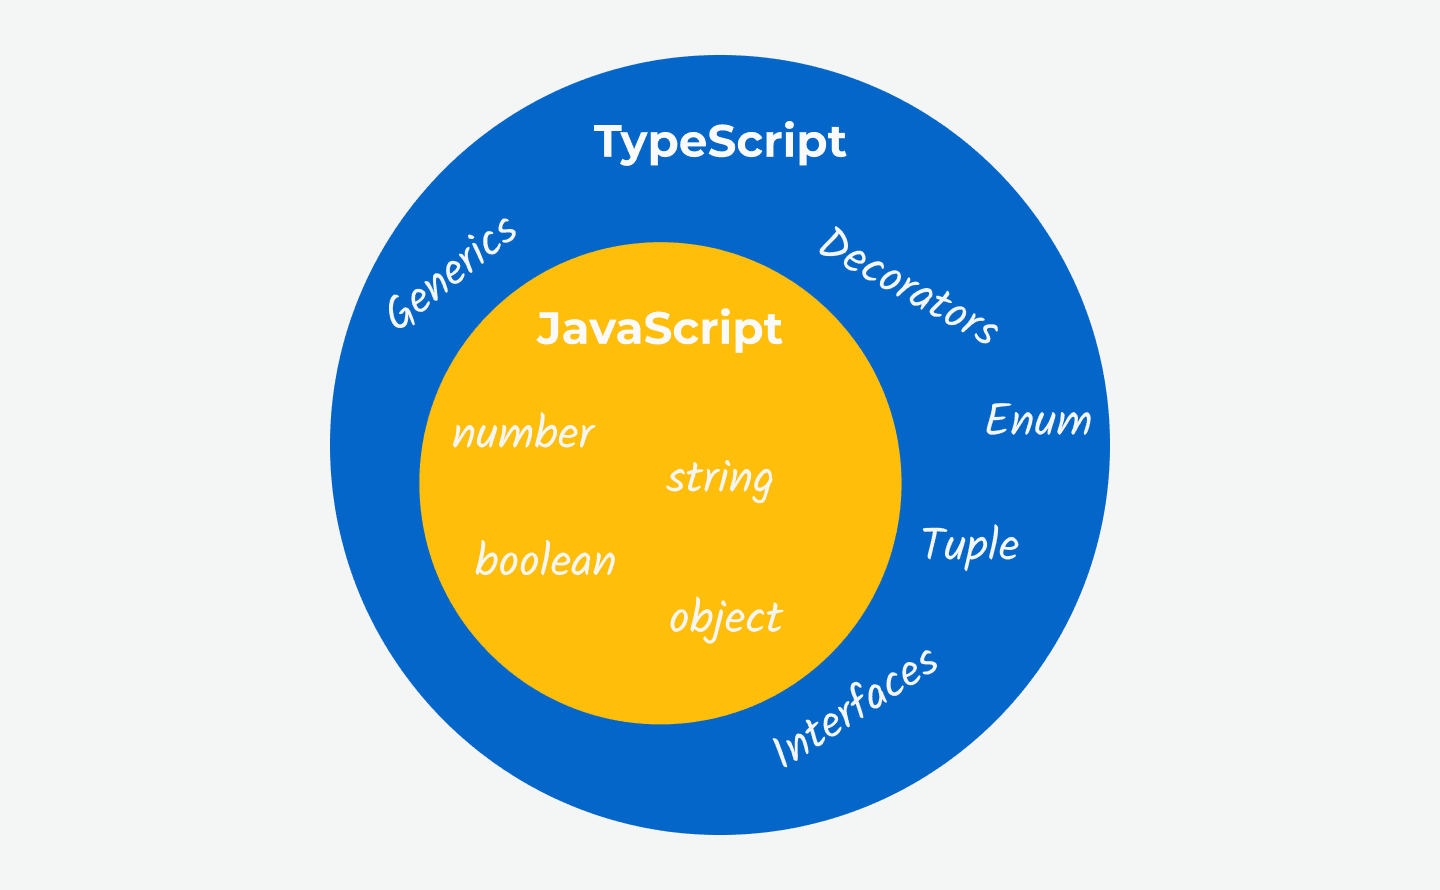 JavaScript and TypeScript venn diagram